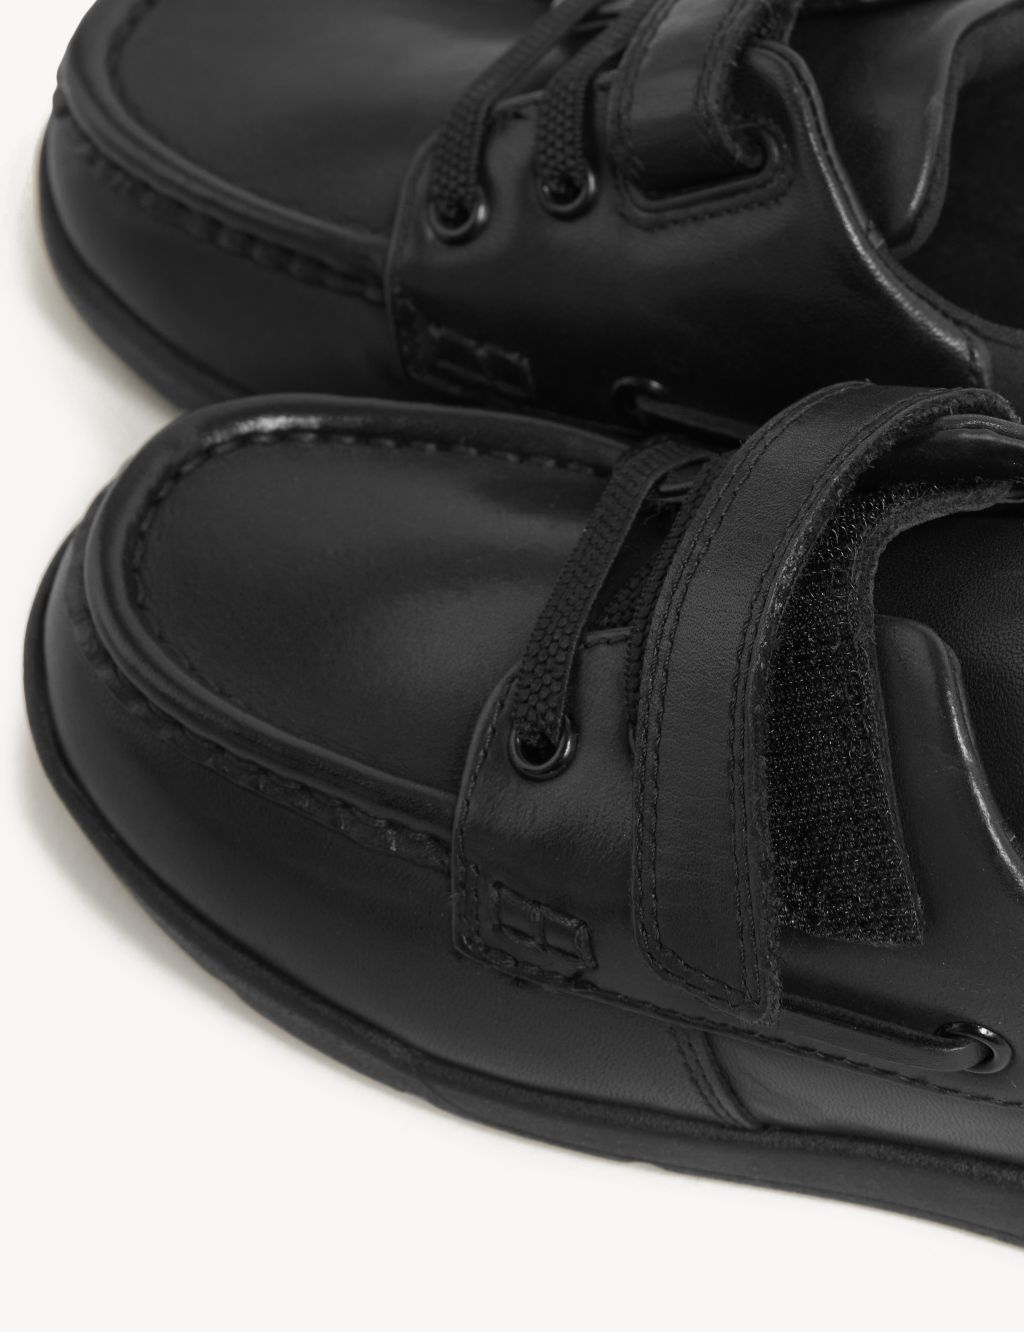 Kids' Leather Freshfeet™ Riptape School Shoes (8 Small - 2 Large) image 2